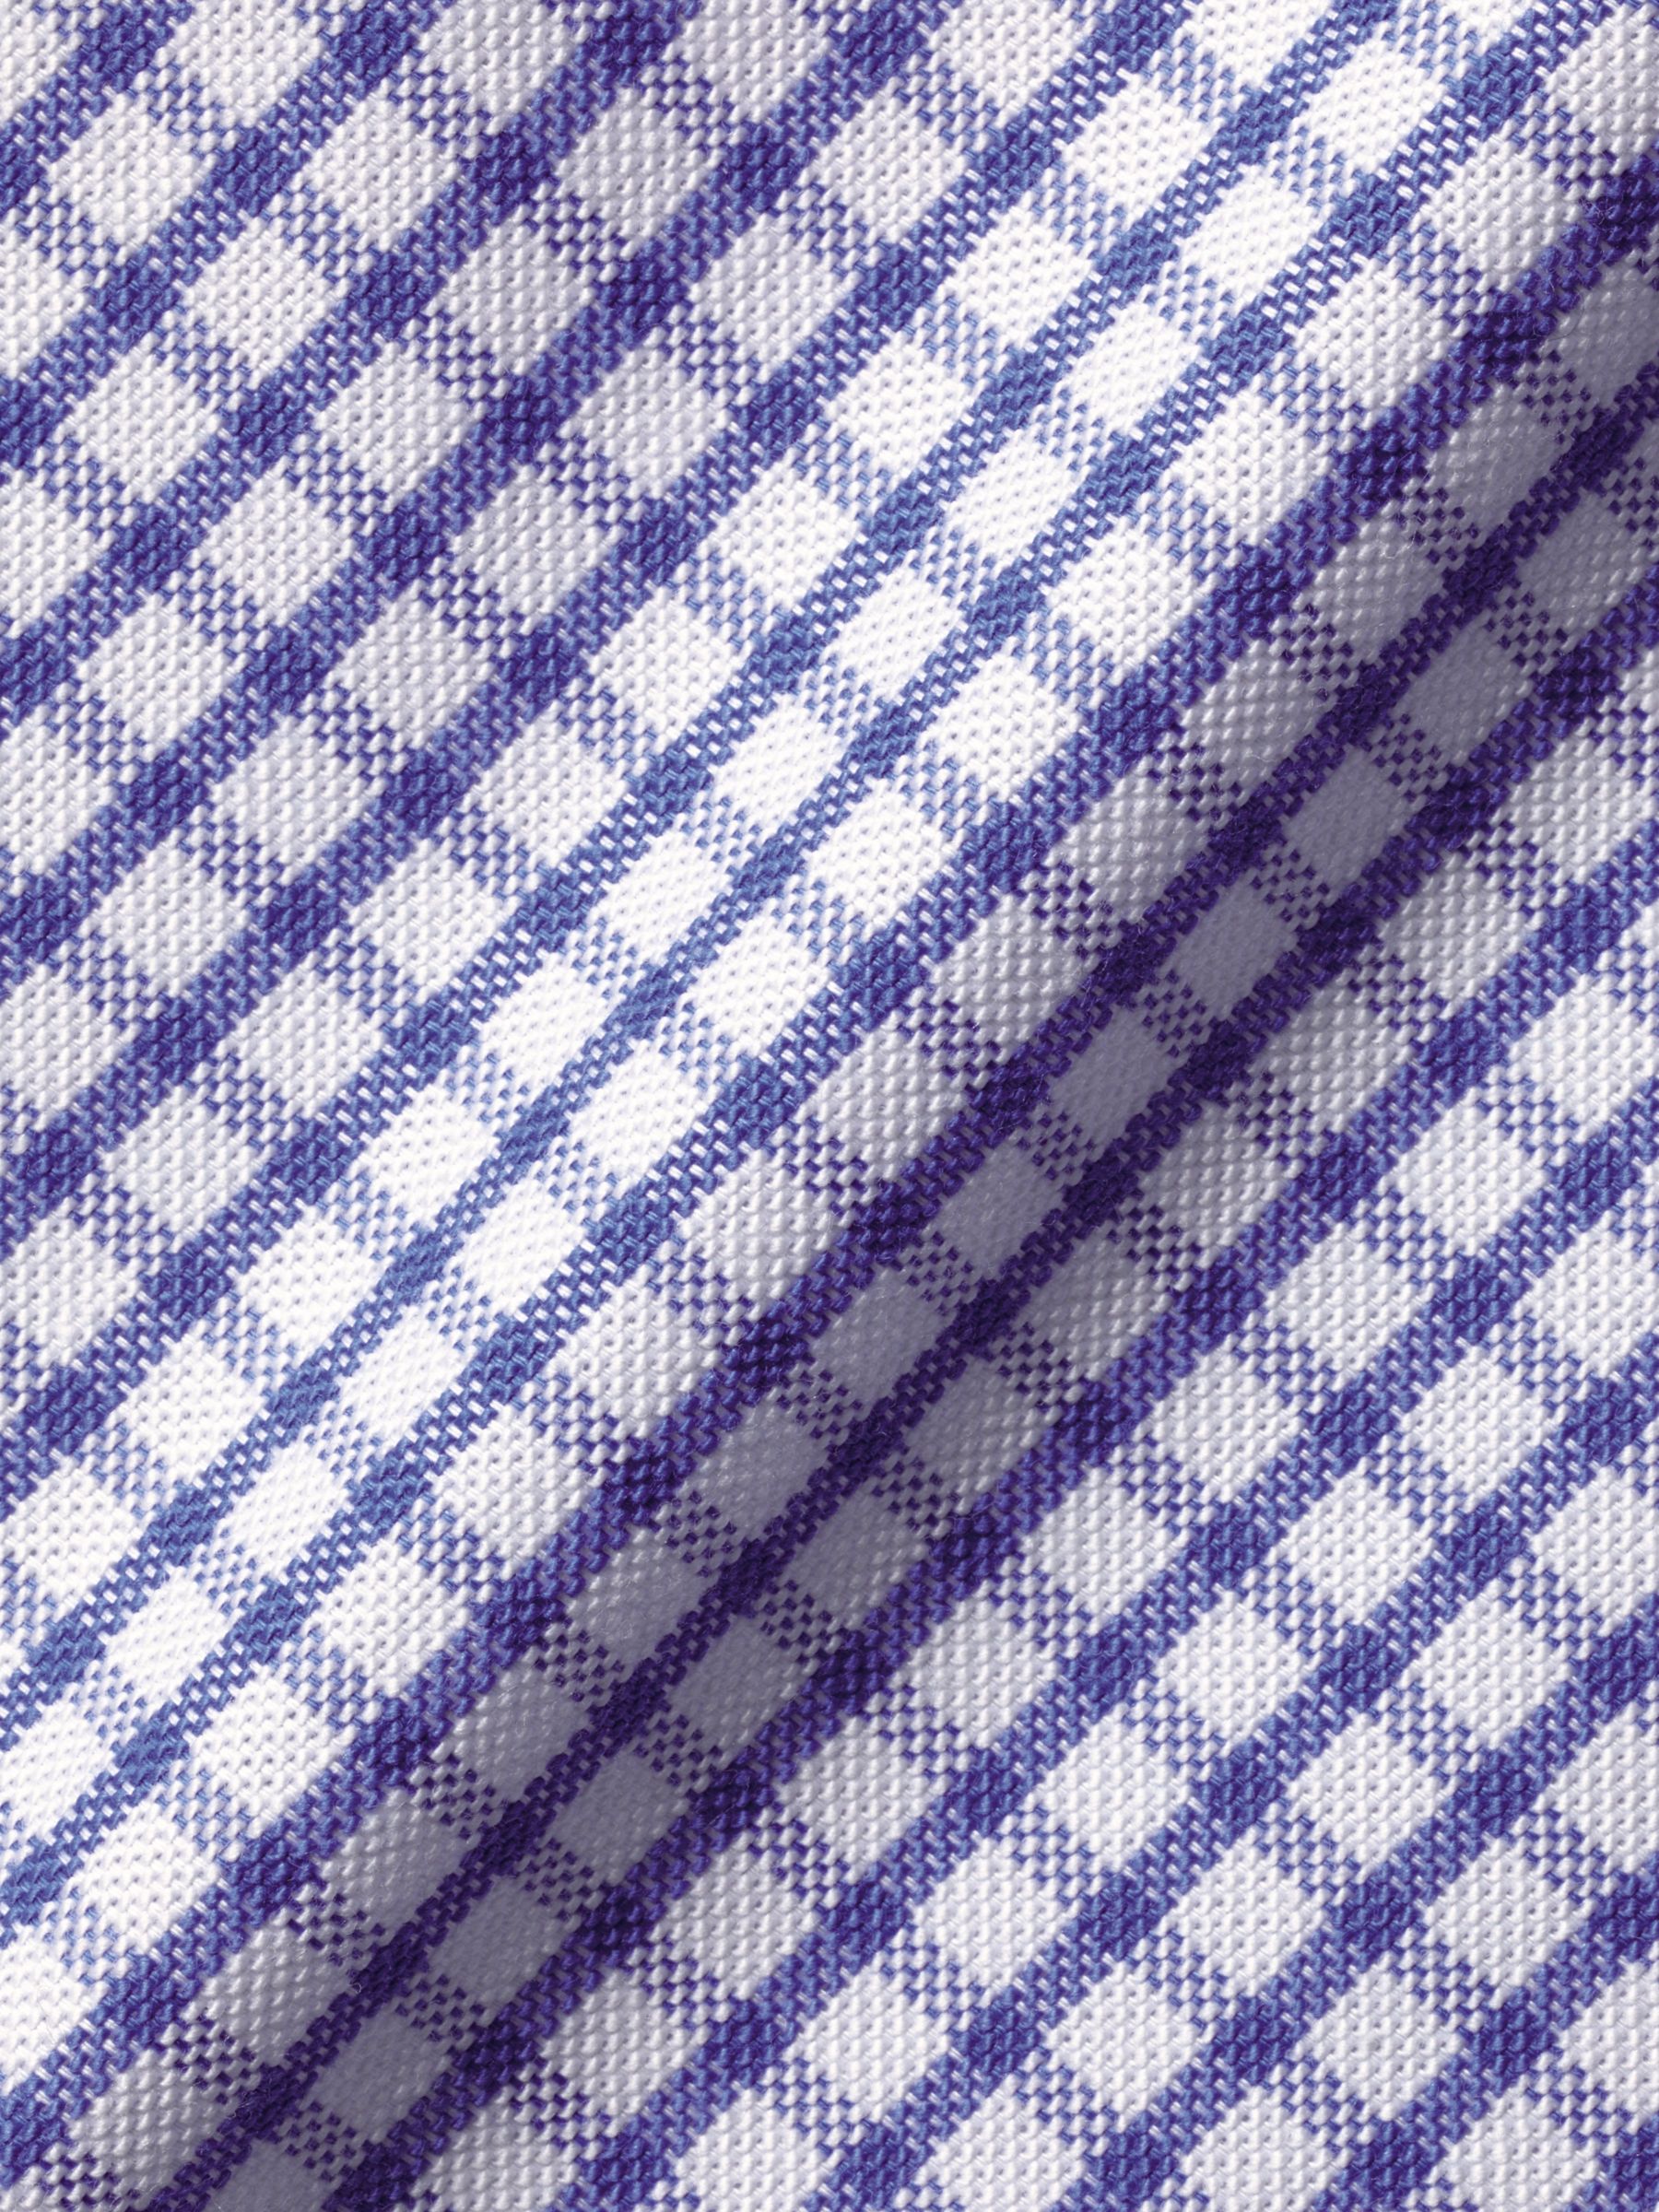 Charles Tyrwhitt Non-Iron Stretch Check Oxford Shirt, Cornflower Blue, M